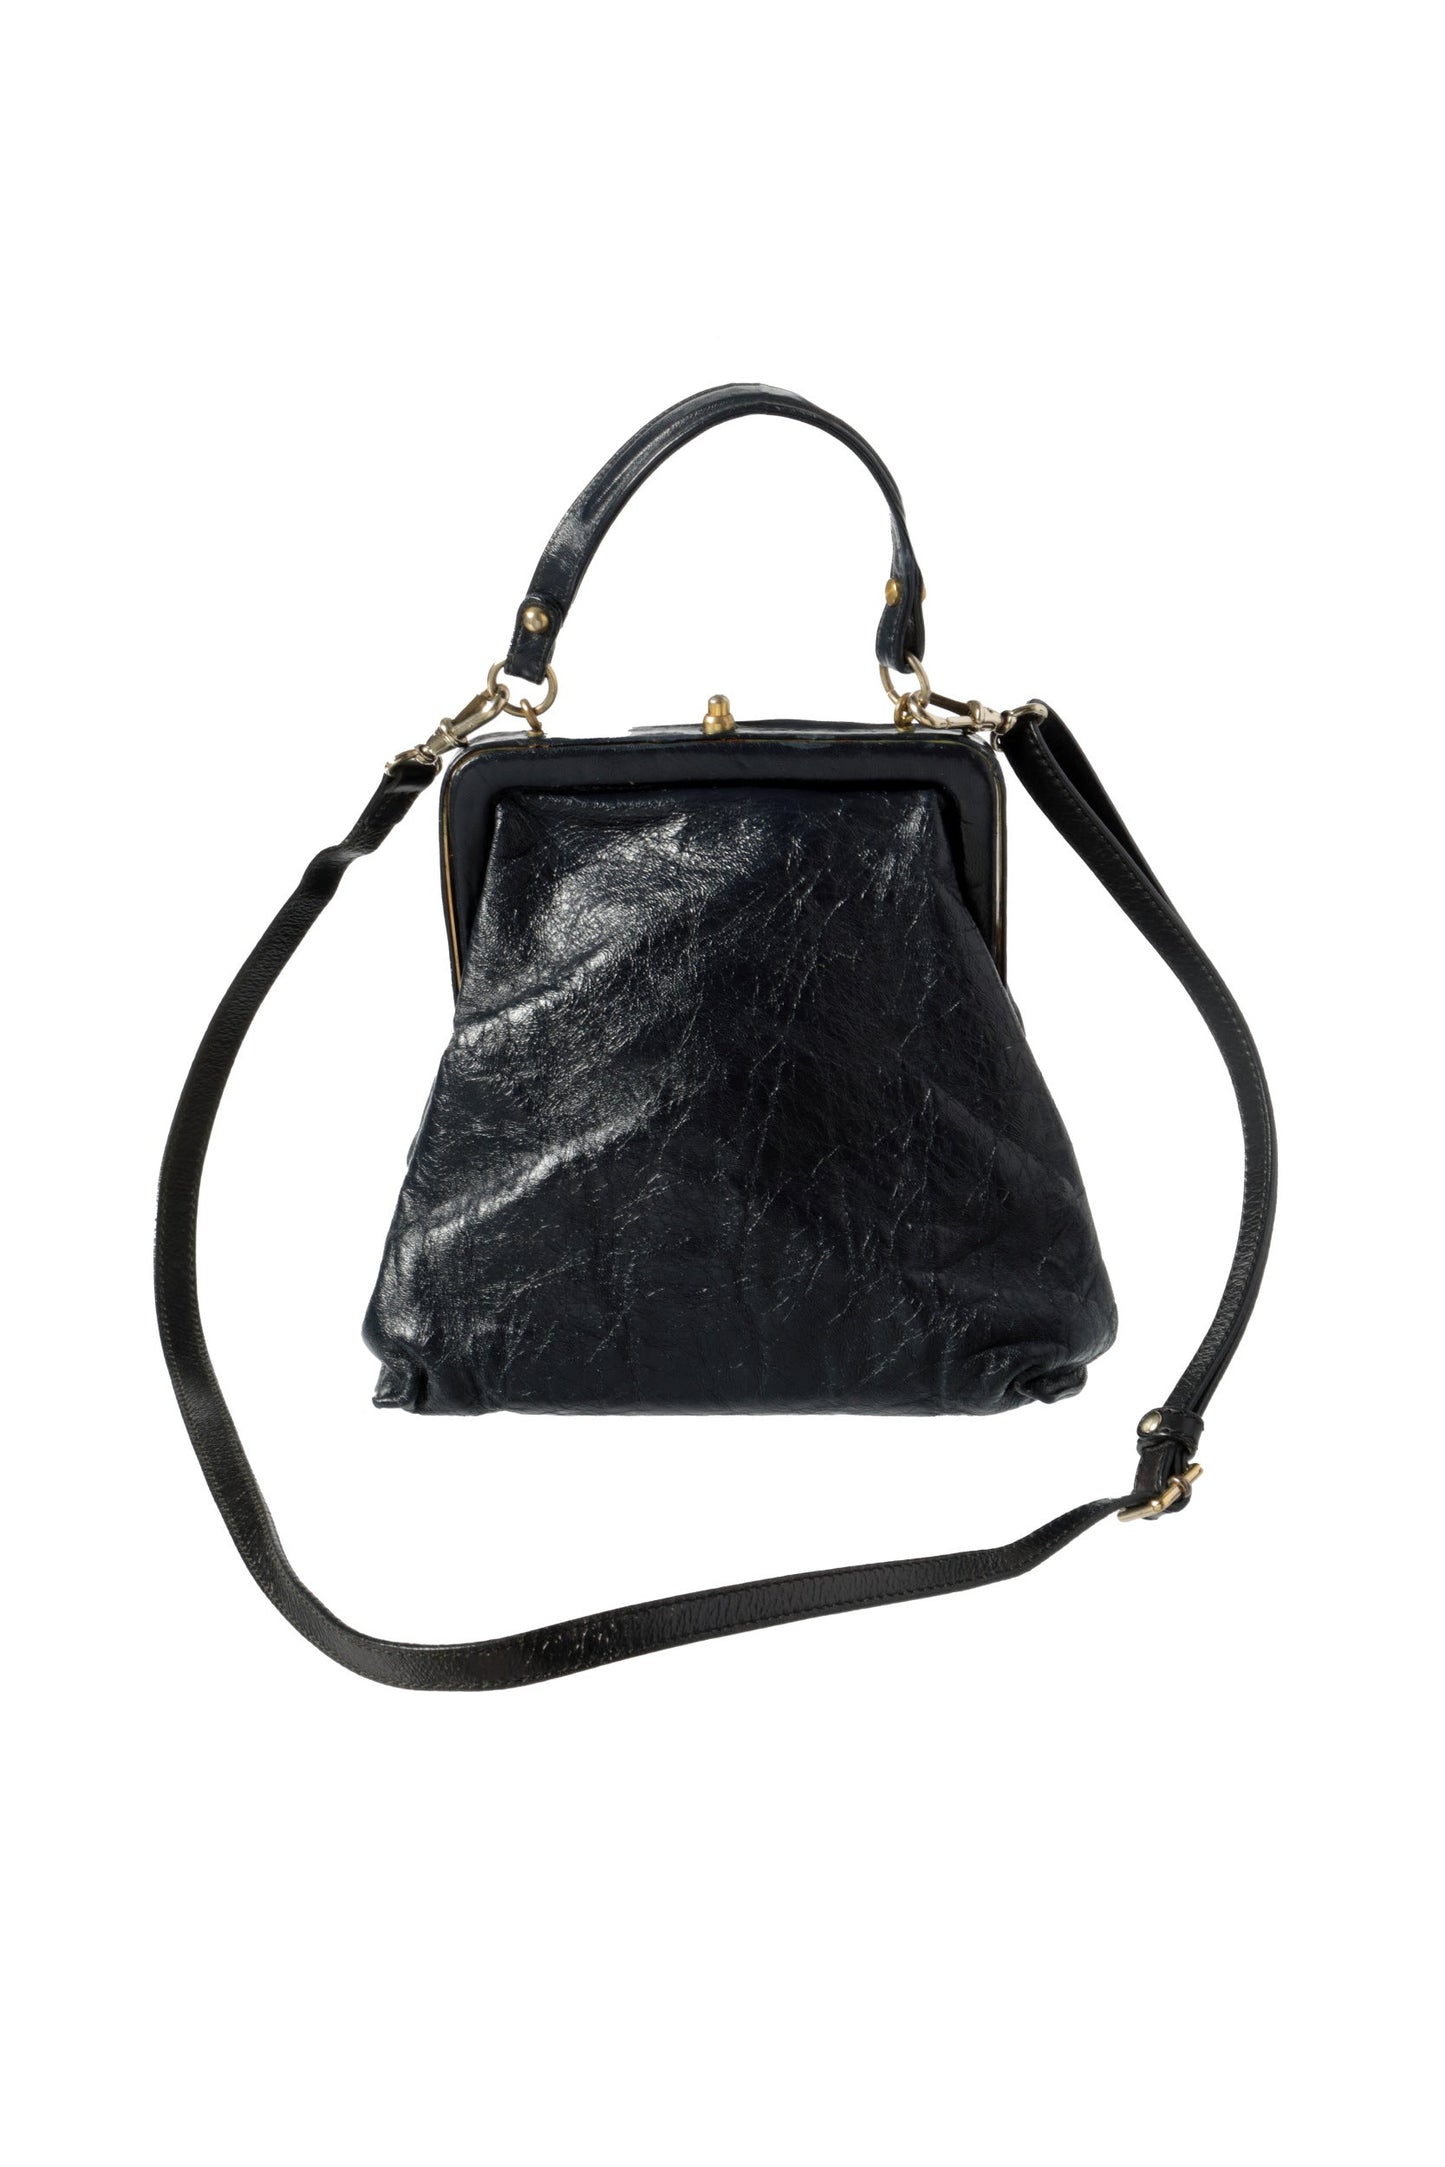 Roberta di Camerino leather handbag